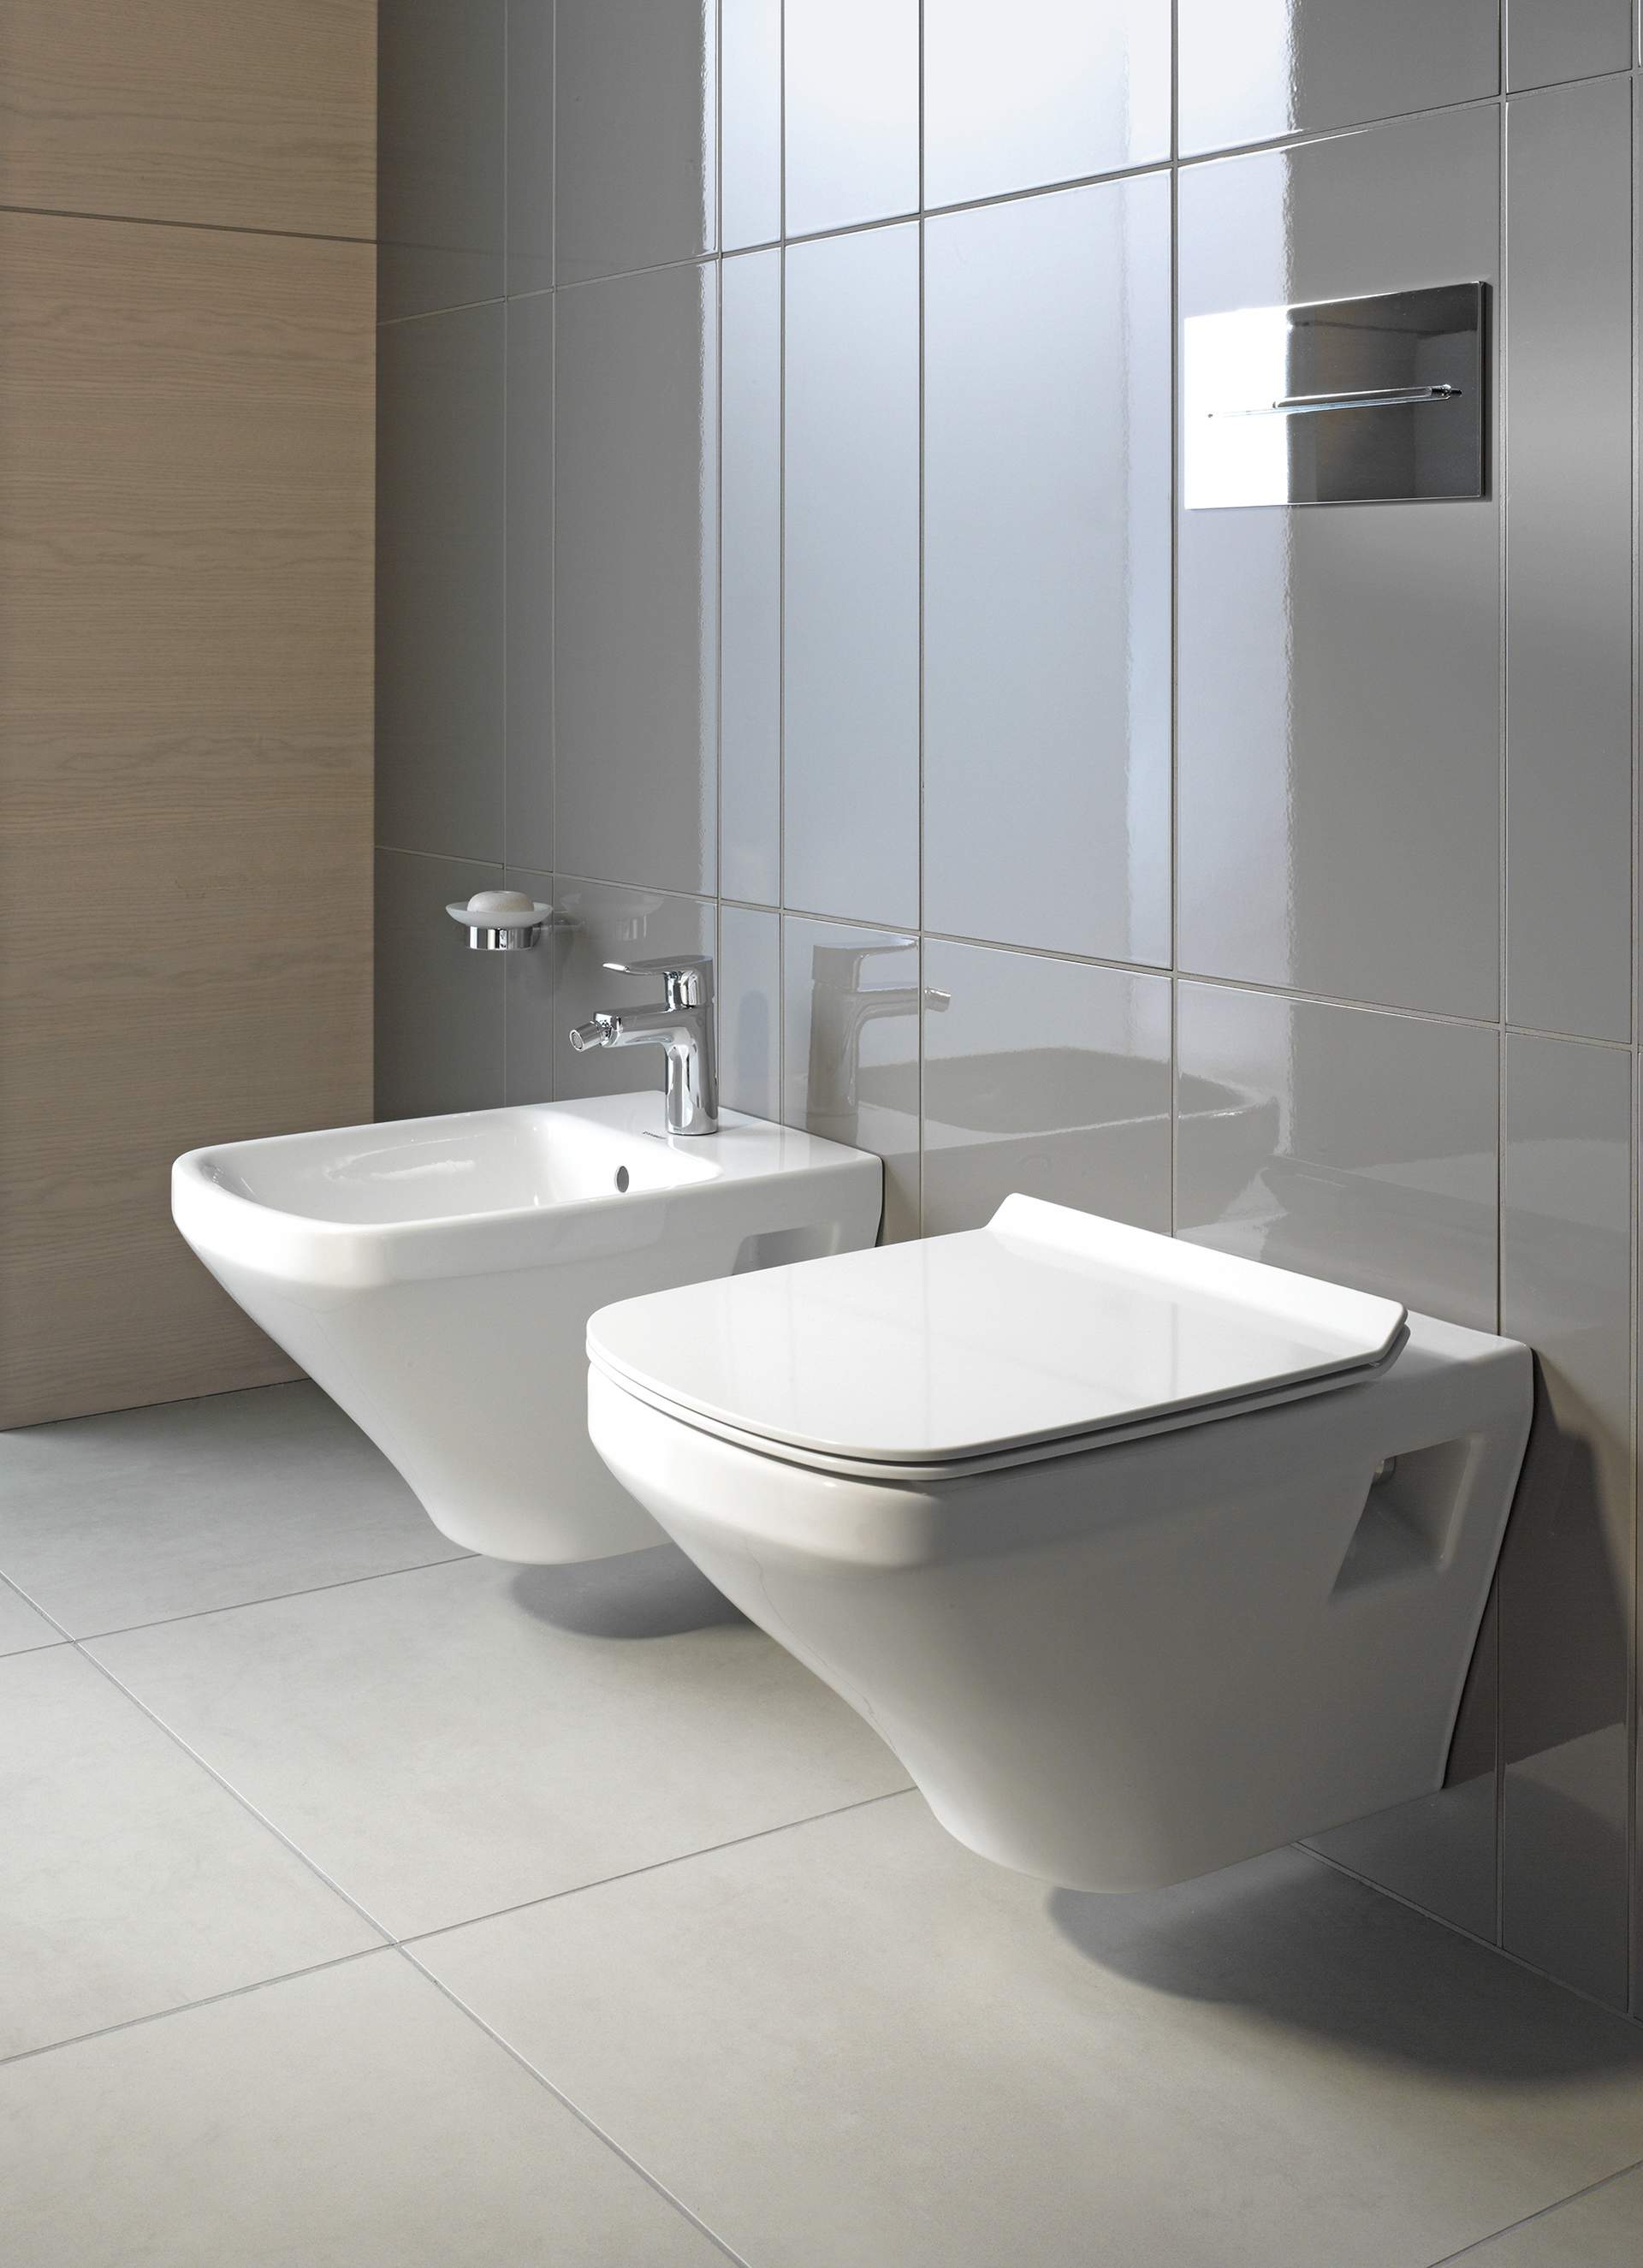 Toilet wall-mounted Duravit Rimless®, 253809